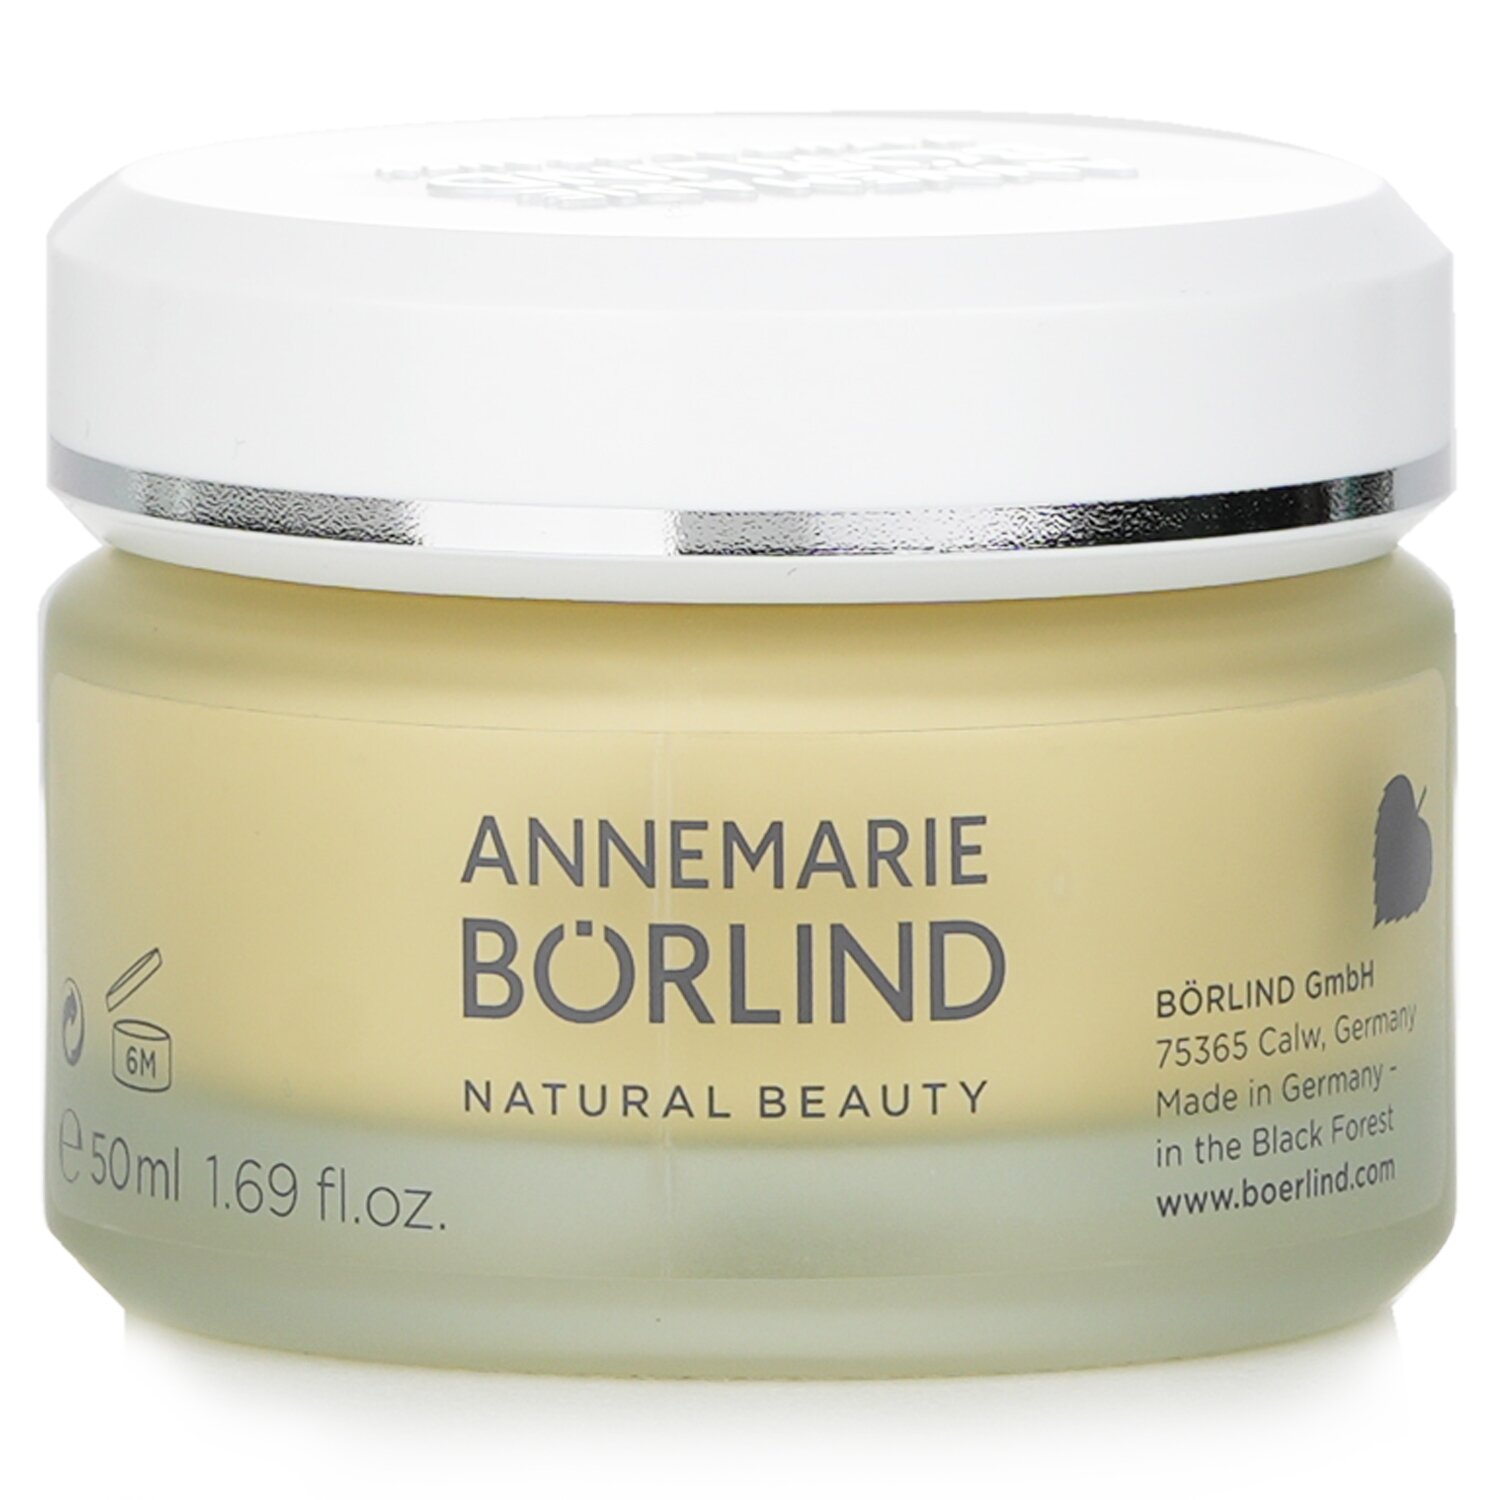 Annemarie Borlind LL Regeneration System Vitality Revitalizing Cream Night 50ml/1.69oz